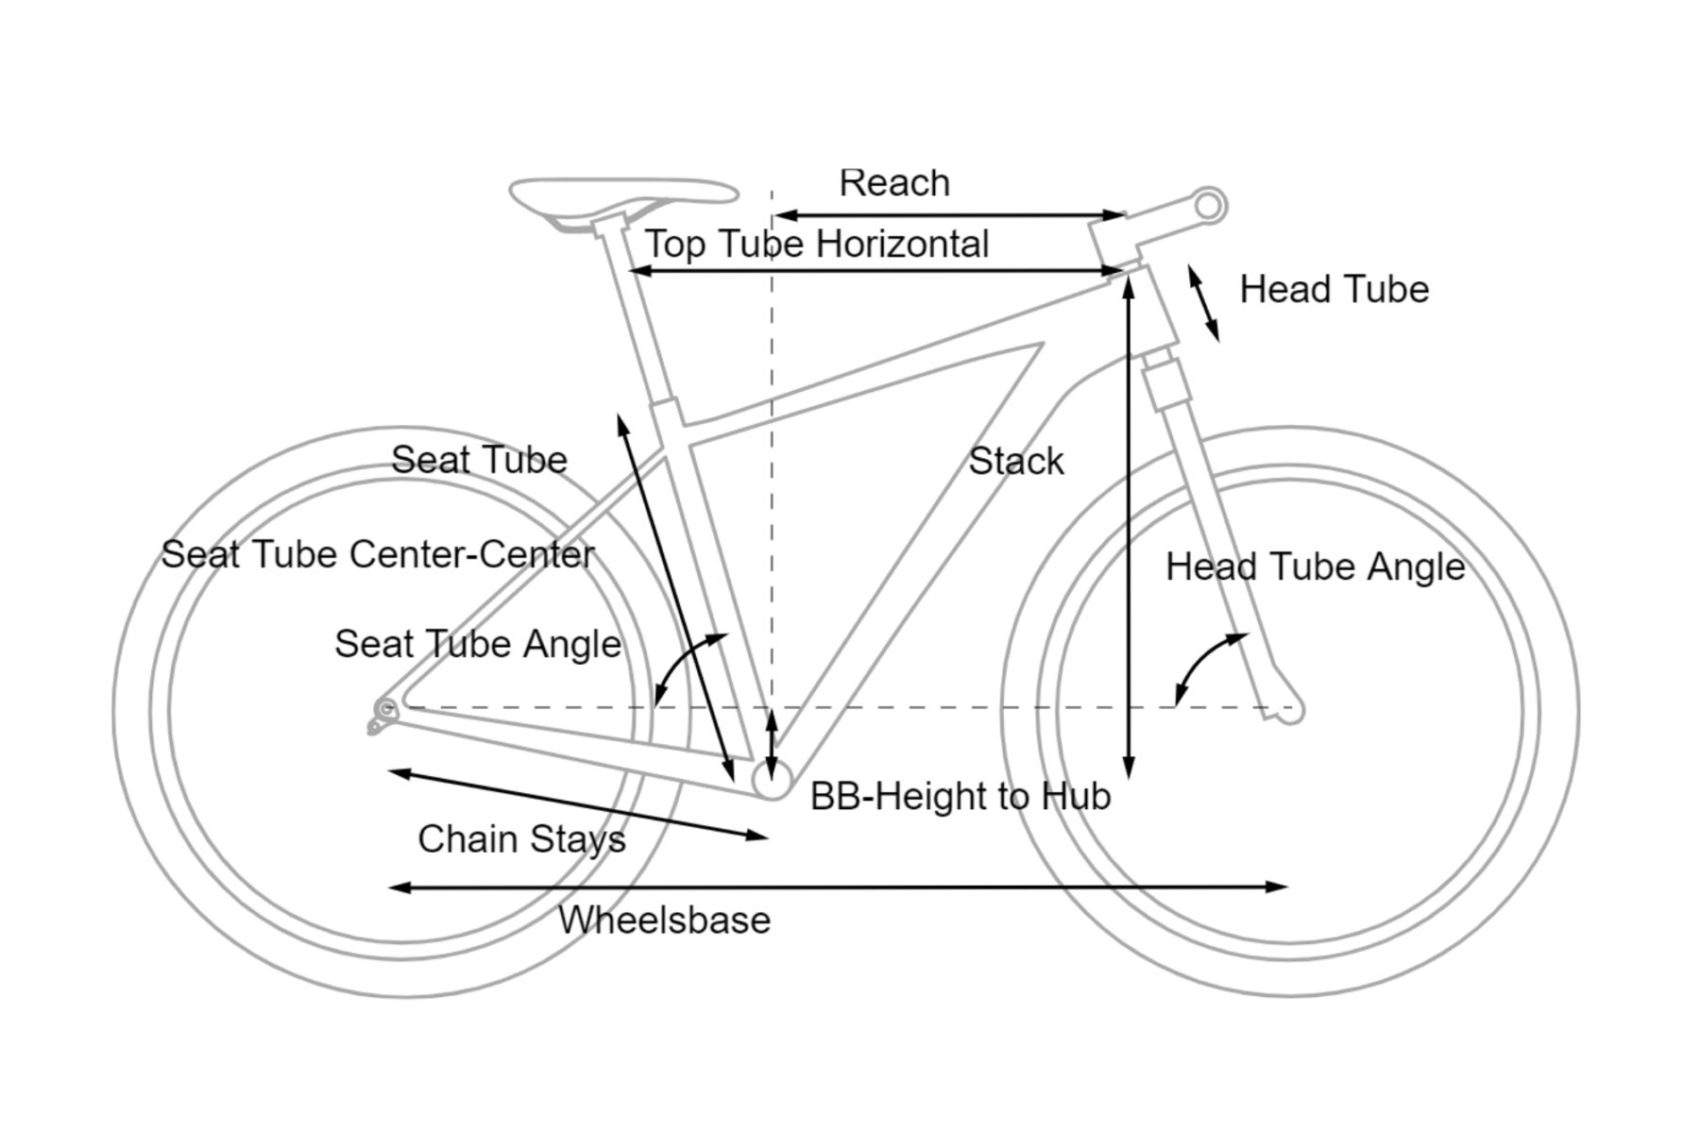 Bicycle Frame Geometry